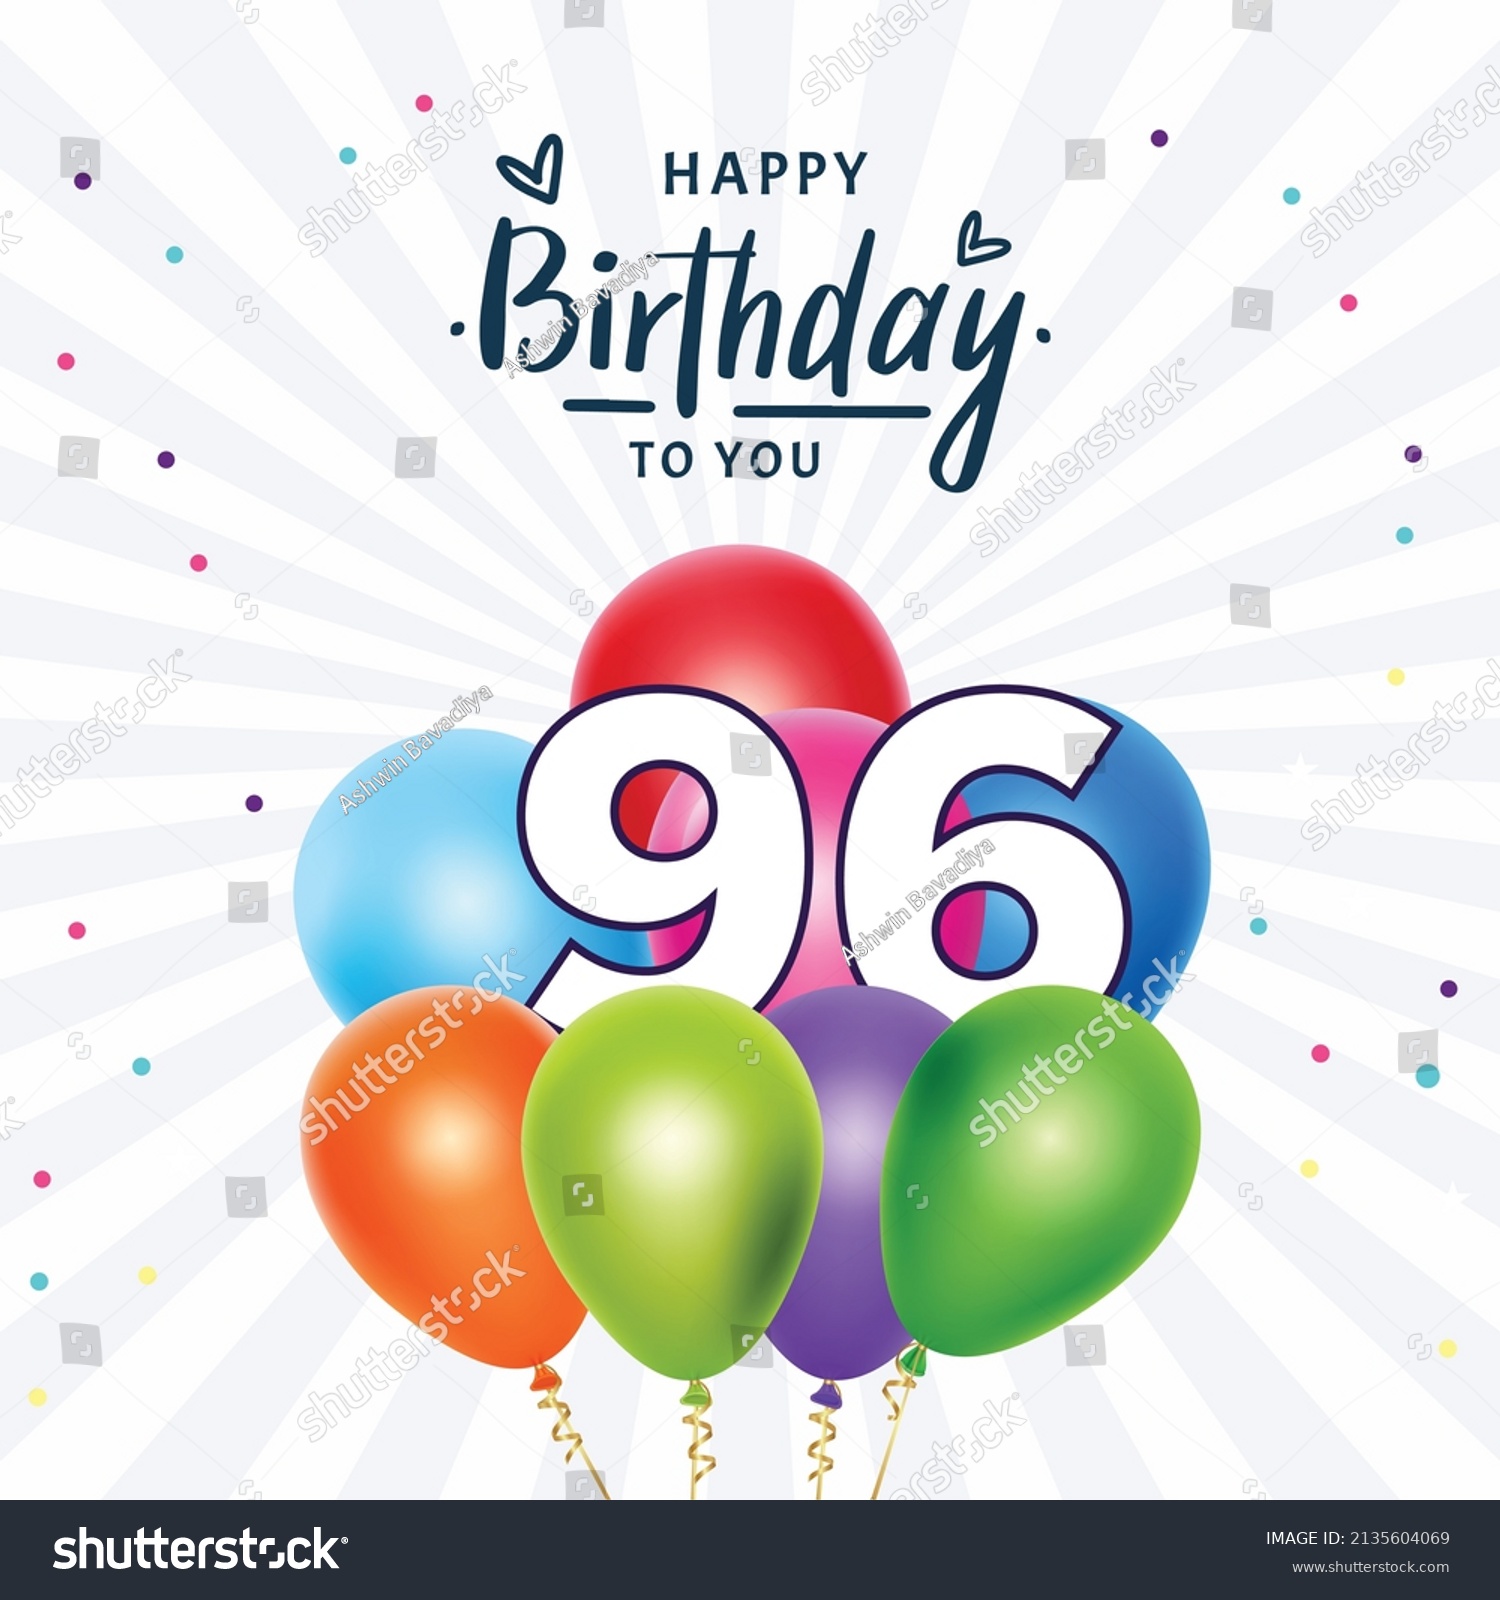 Happy 96th Birthday Greeting Card Vector Stock Vector (Royalty Free ...